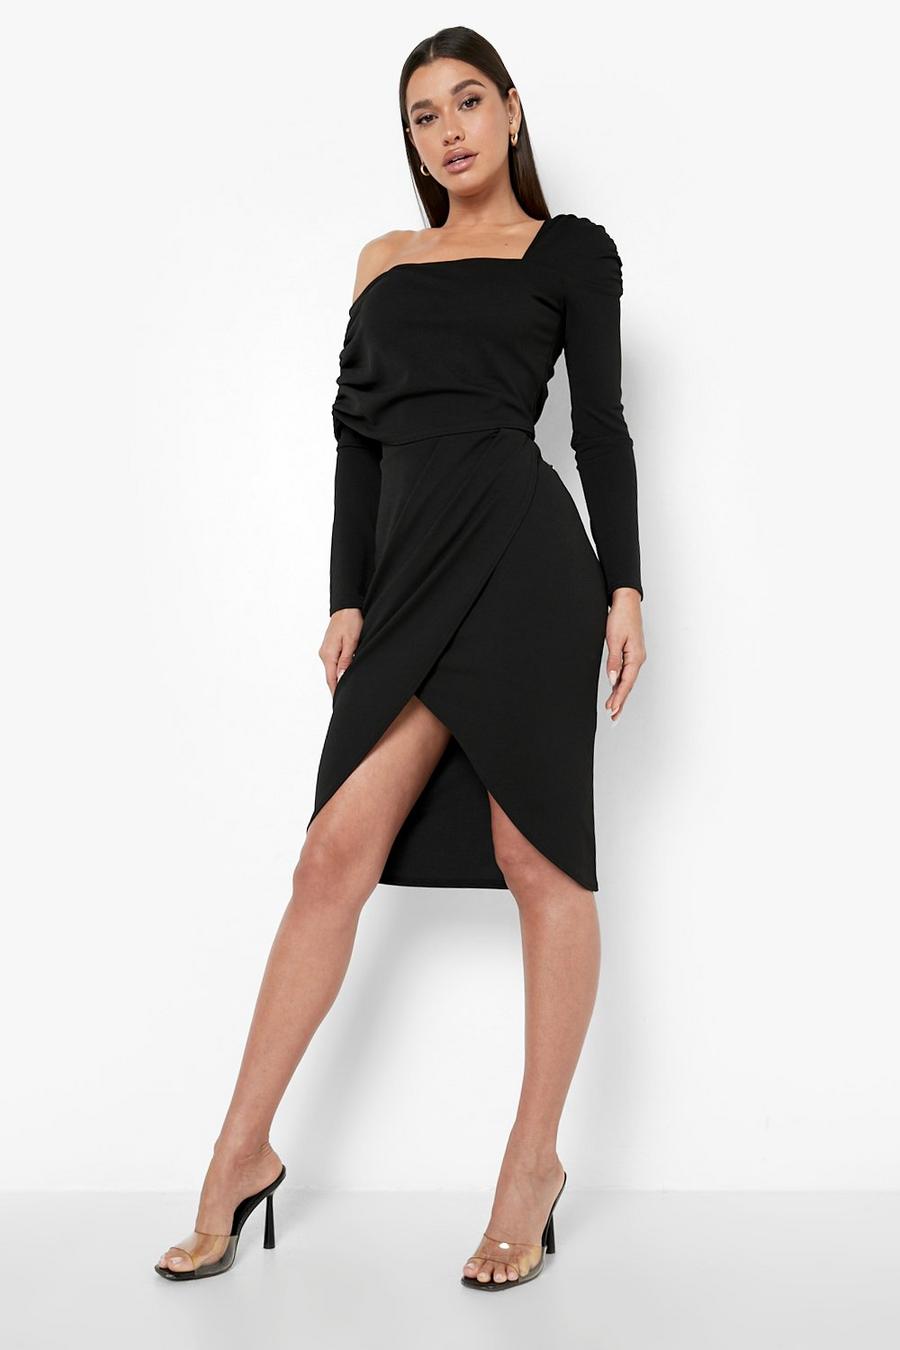 Black One Shoulder Ruched Overlay Midi Dress